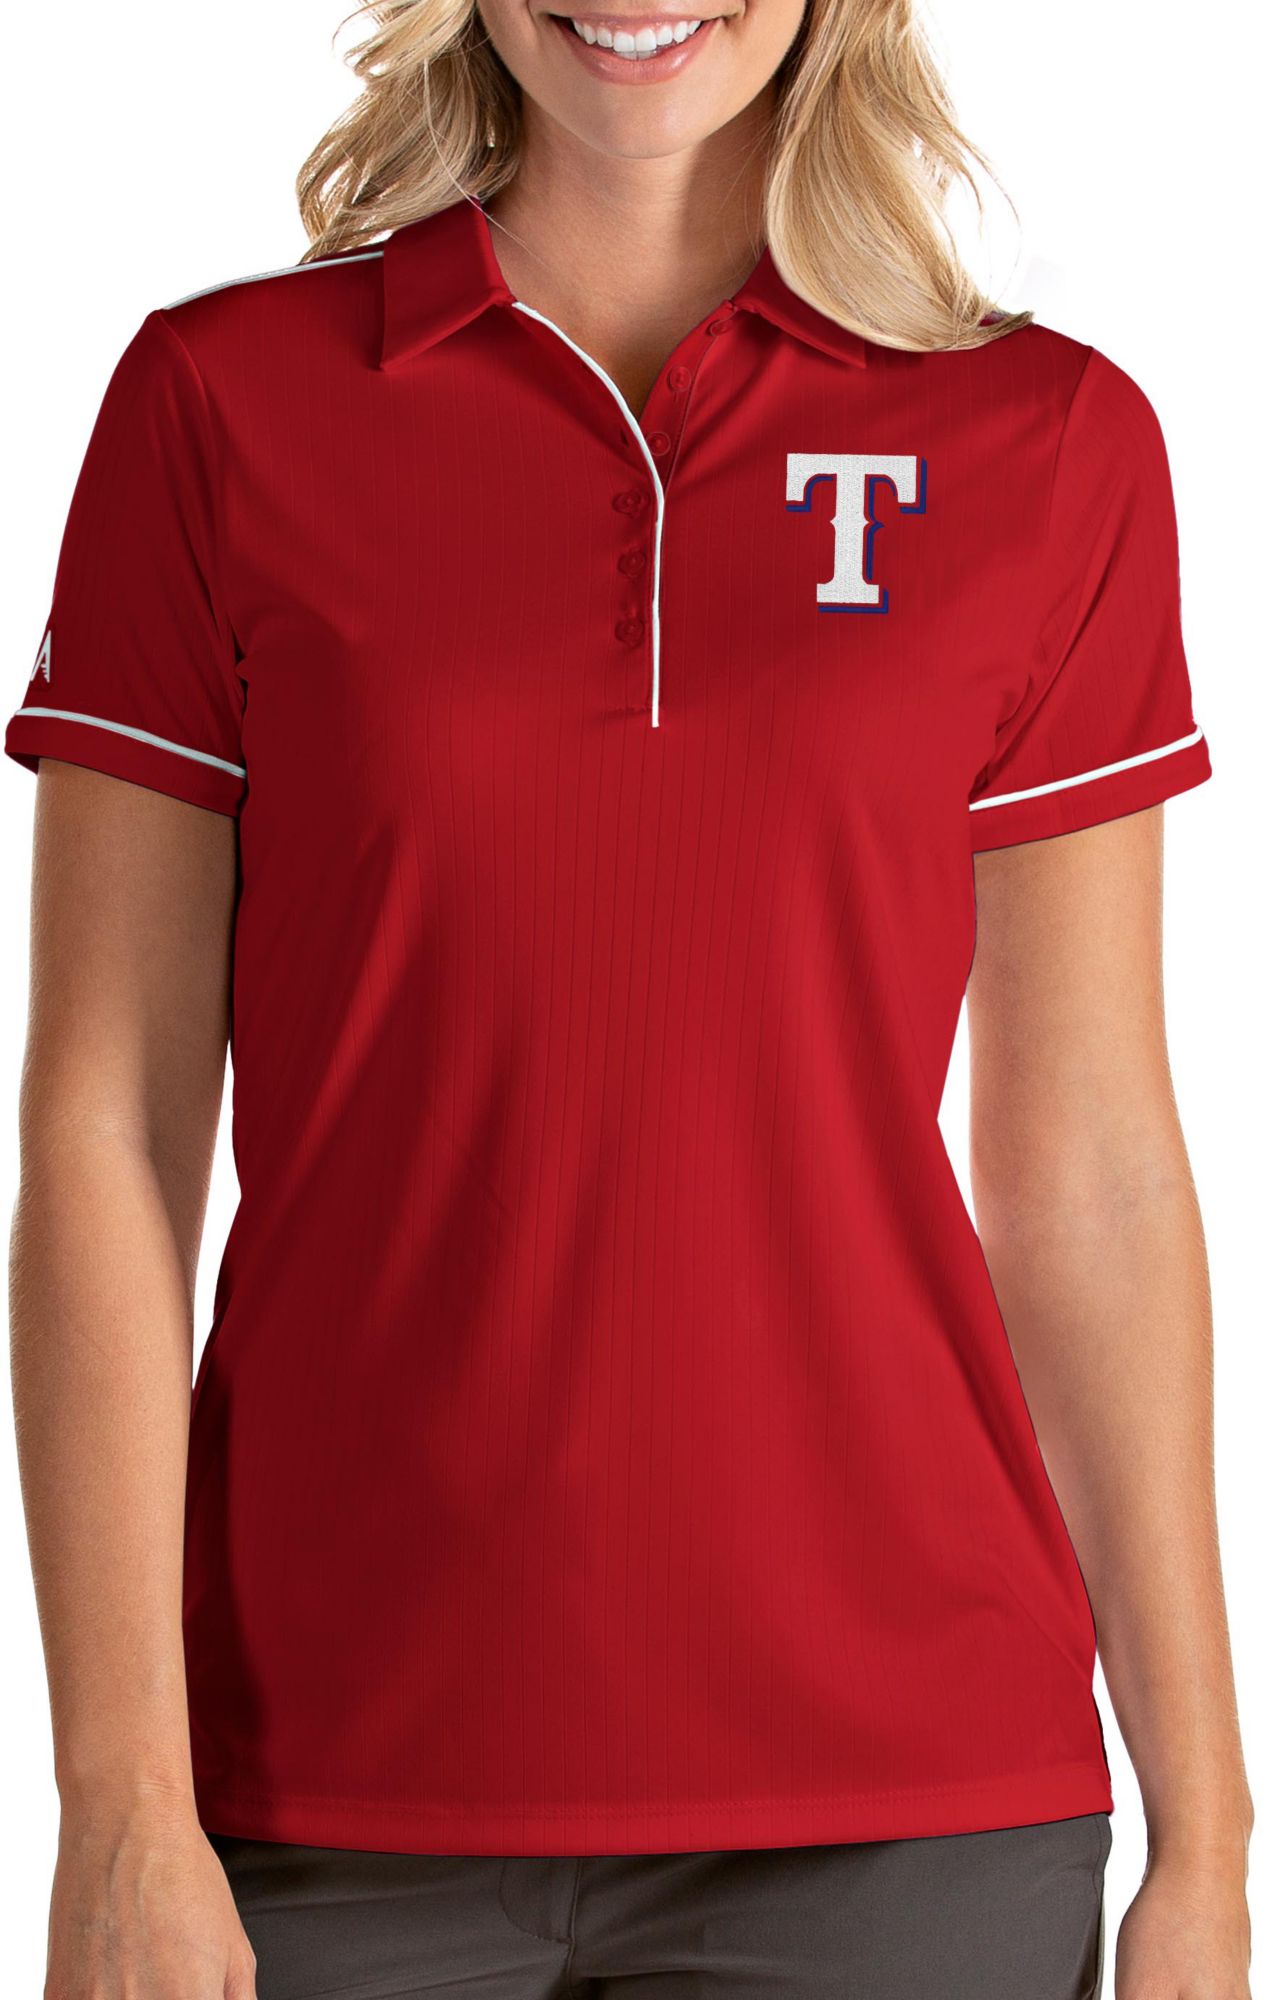 women's plus size texas rangers shirts